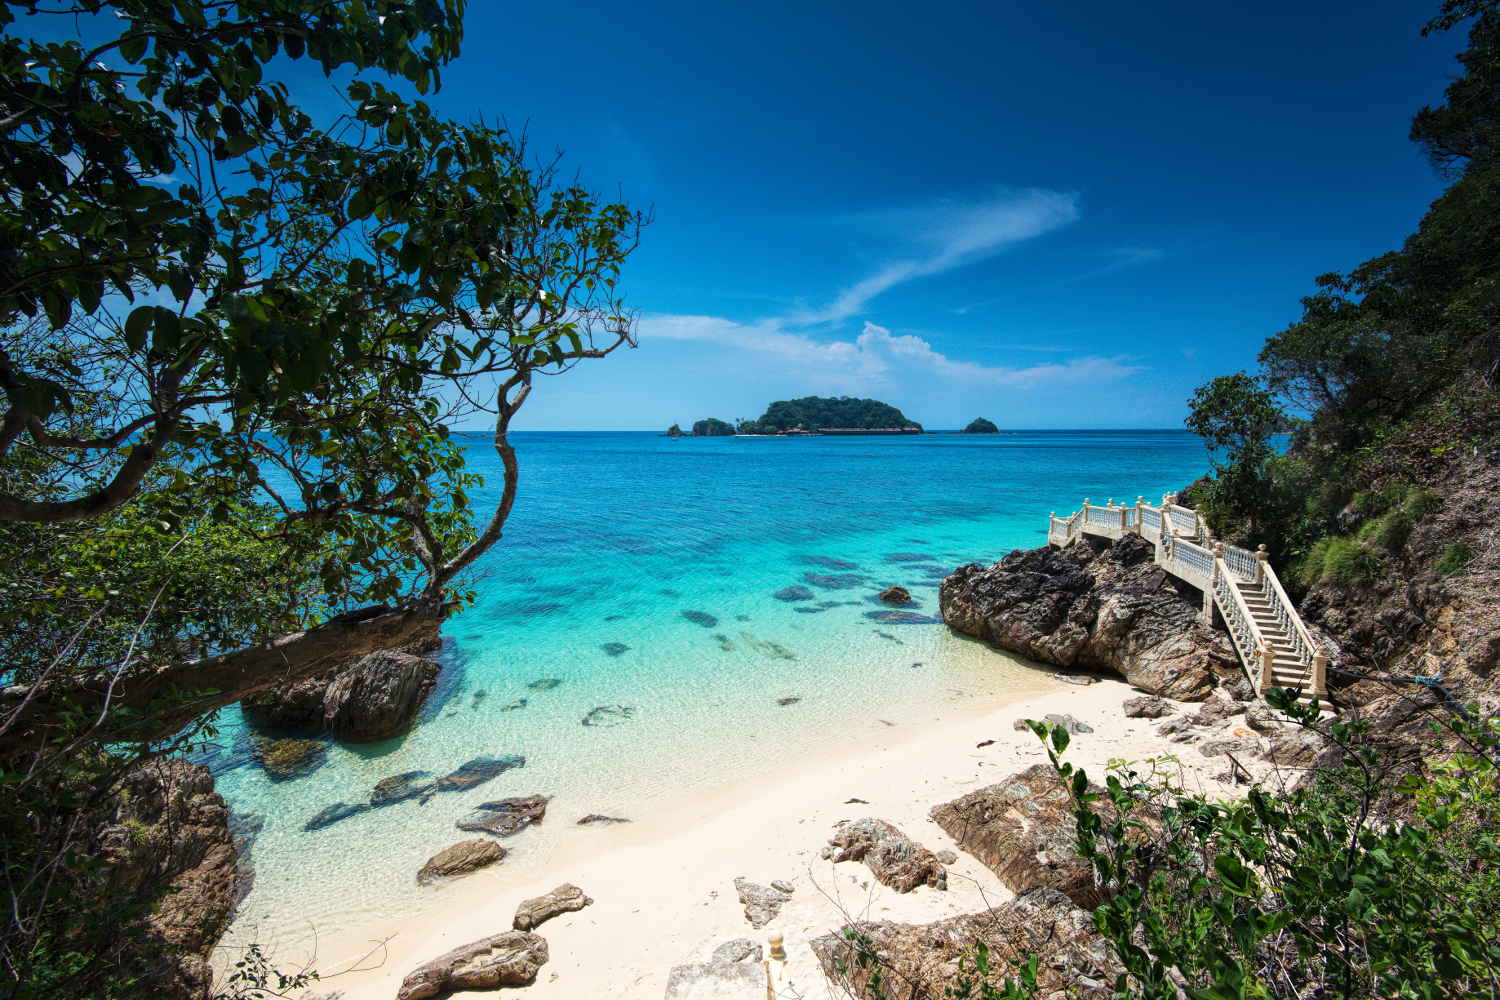 Pristine beach on tiny Pulau Kapas © Geir Kristiansen / Getty Images